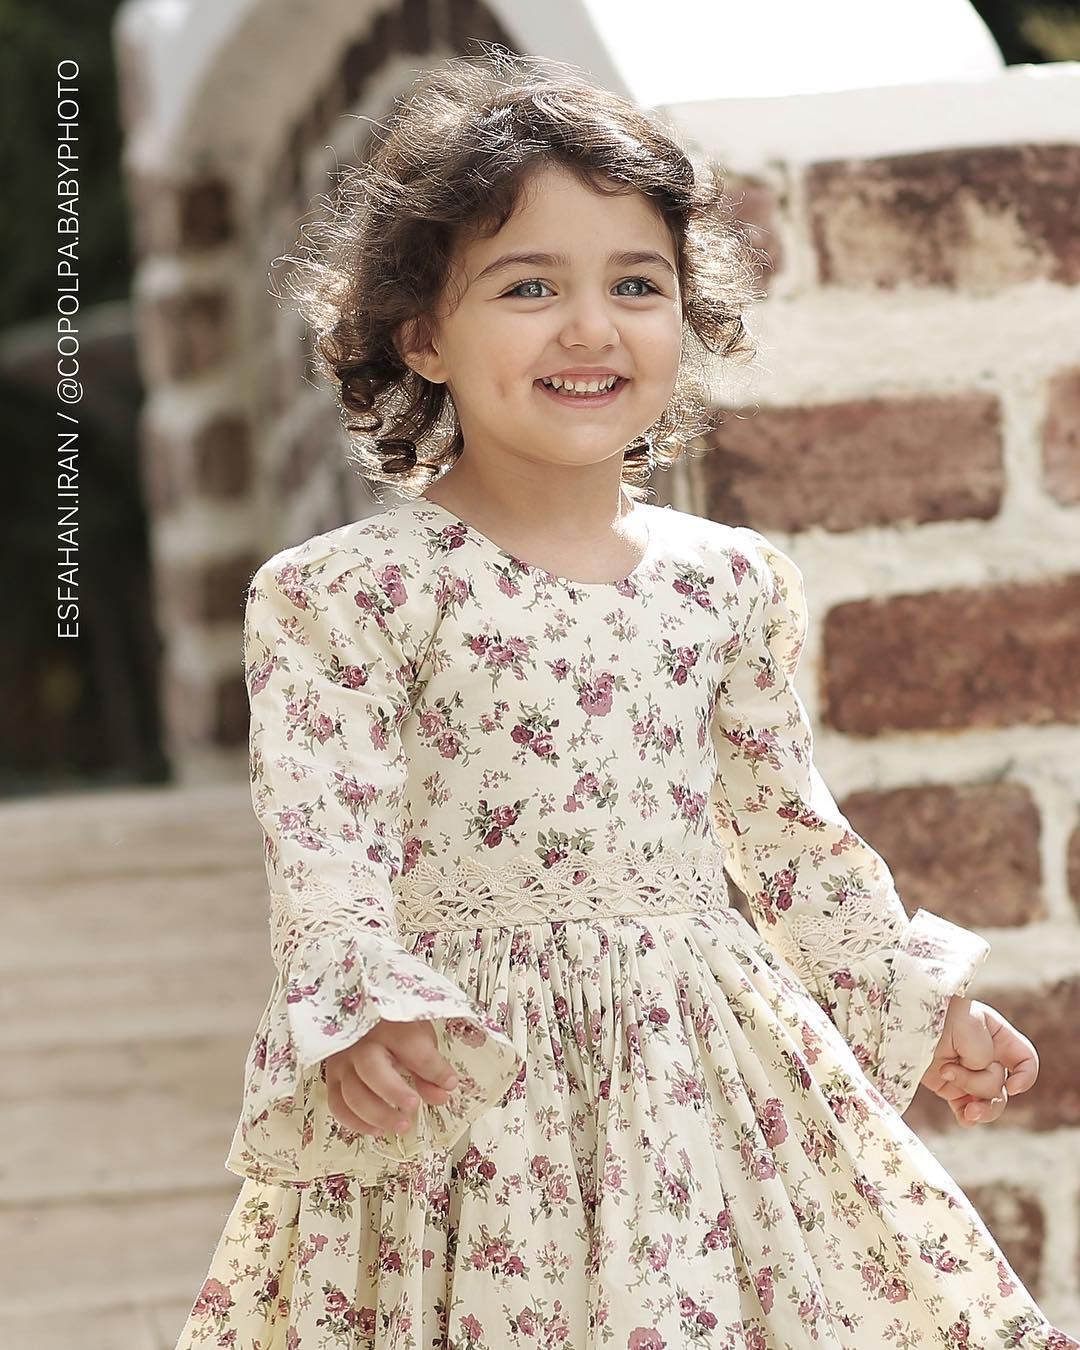 Iran Ki Cute Girl - HD Wallpaper 